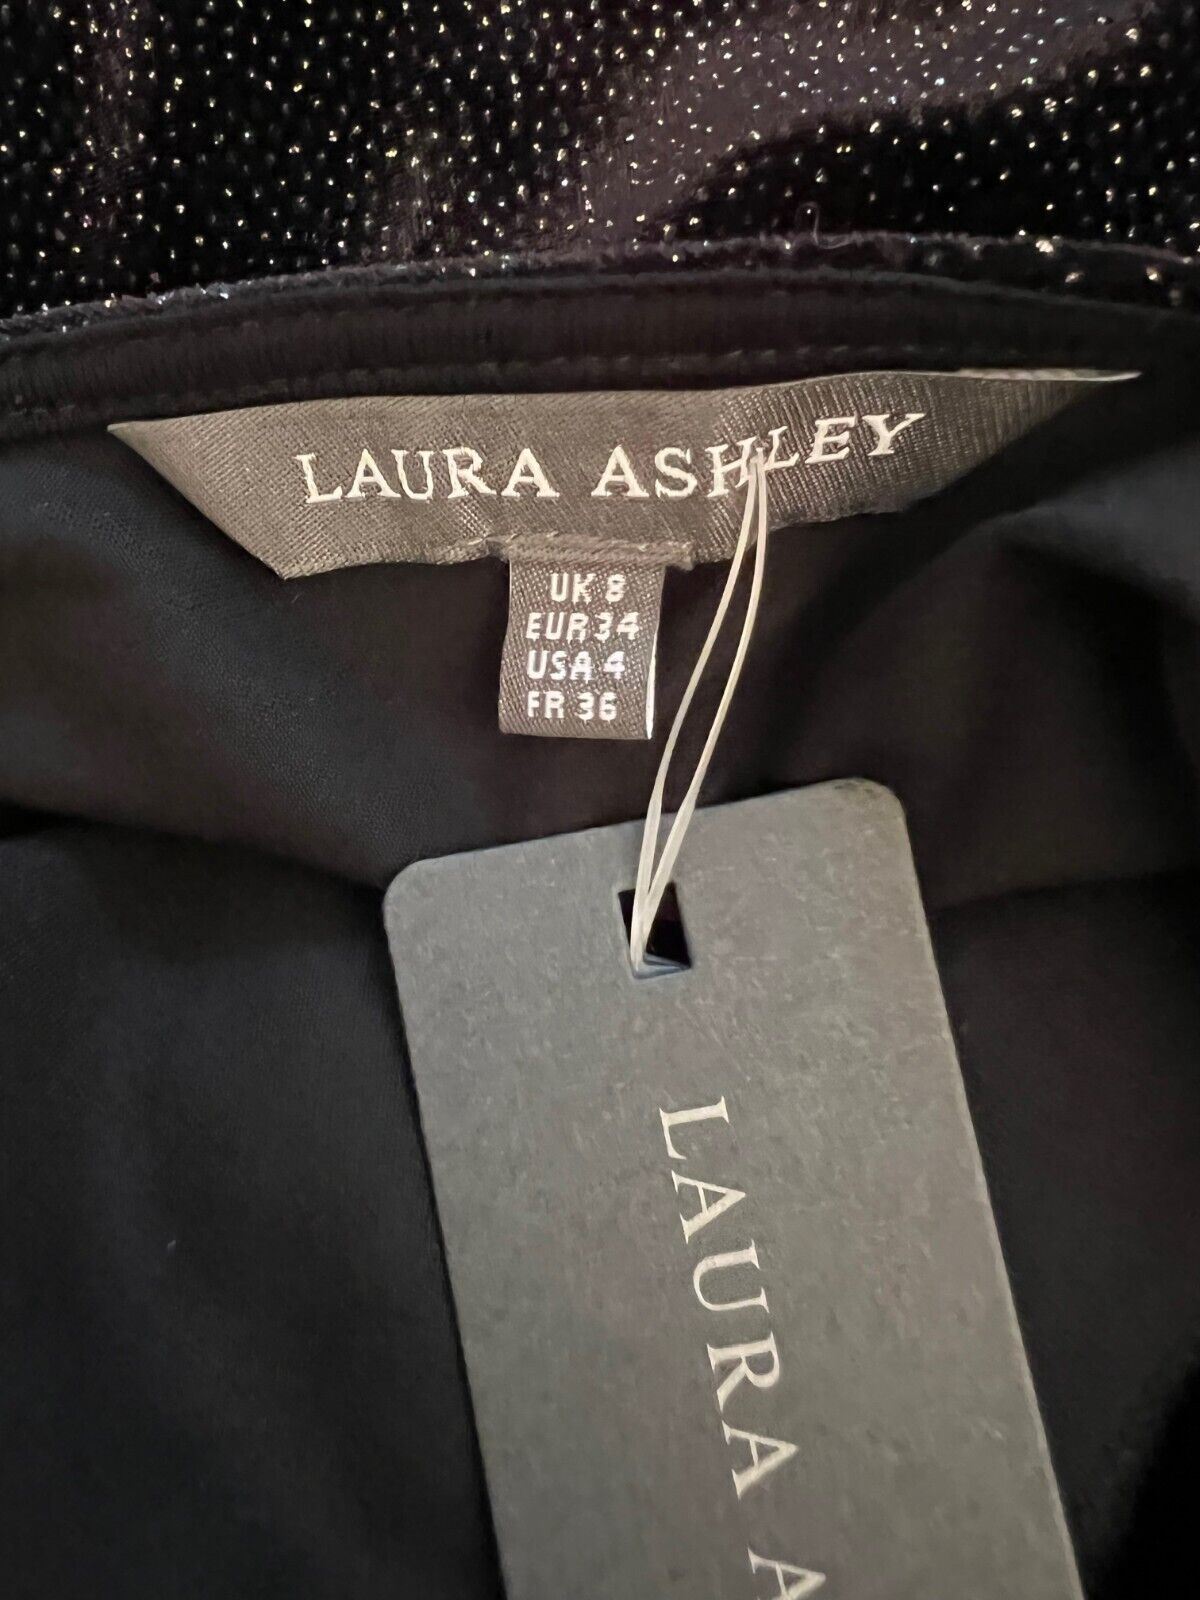 Laura Ashley Ladies Black Sparkly V Back Fit & Flare Dress UK 8 US 4 EU 36 Timeless Fashions